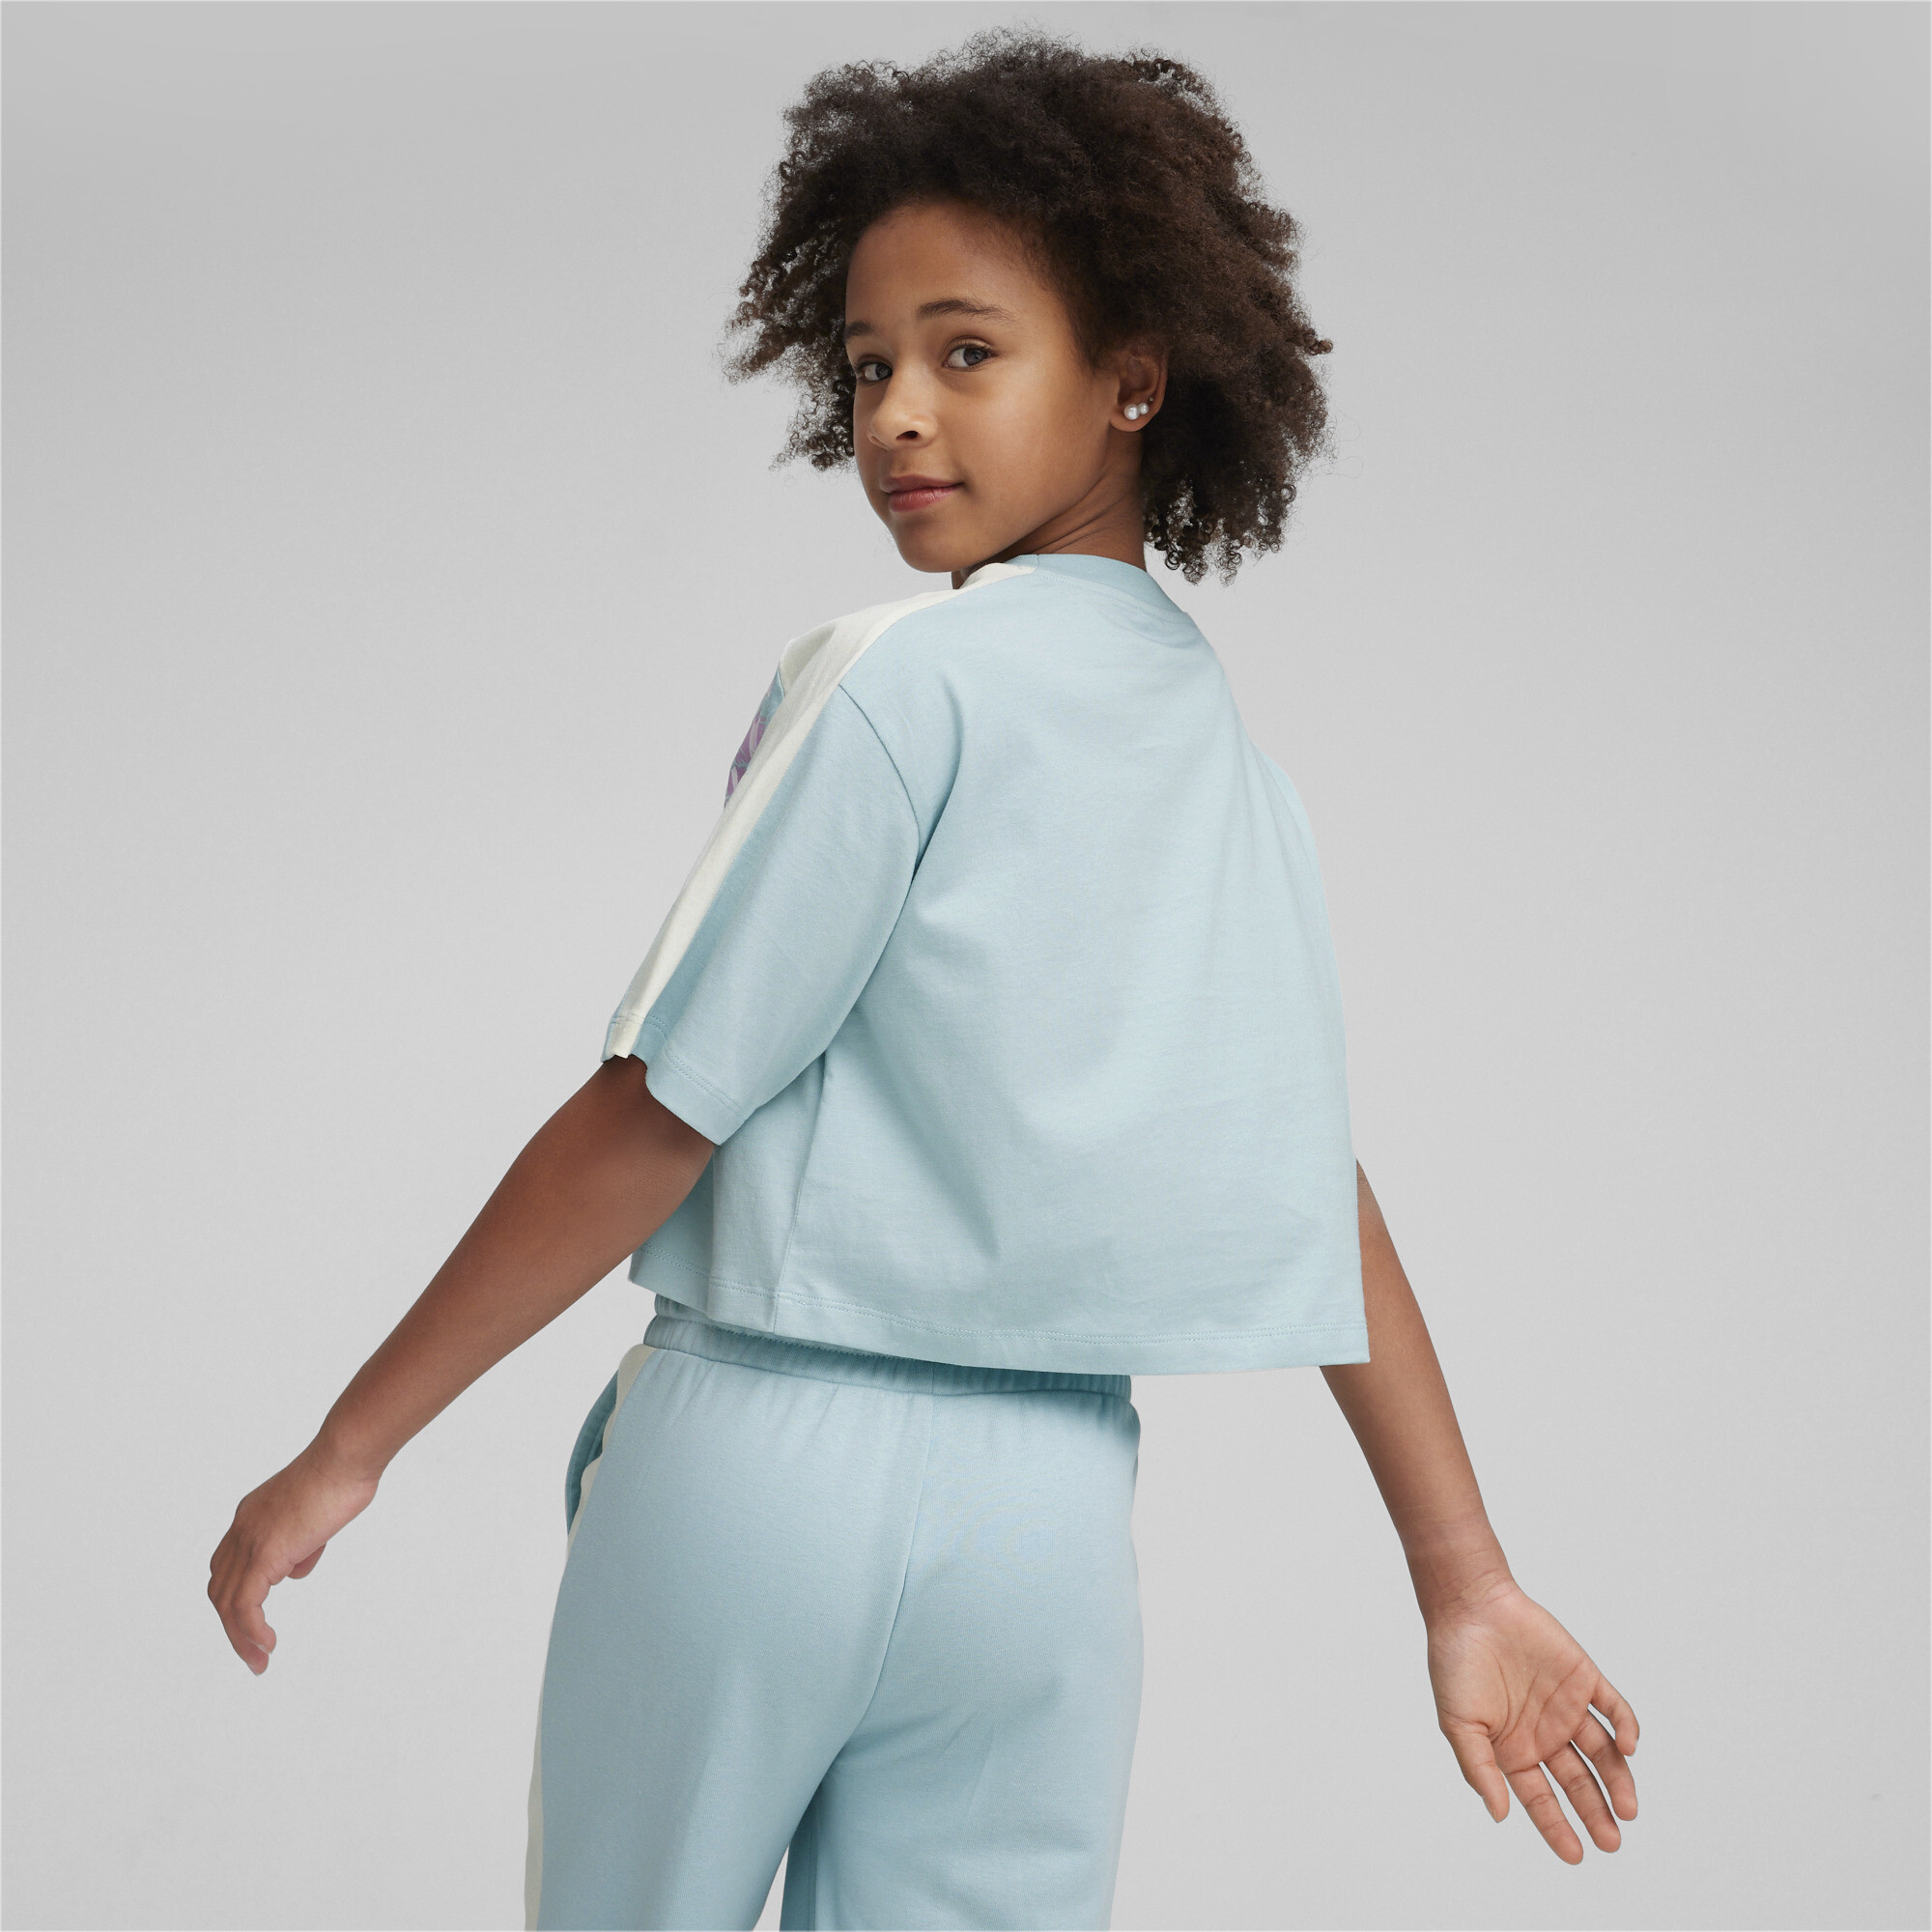 Puma T7 SNFLR Girls' Graphic T-Shirt, Blue, Size 11-12Y, Age